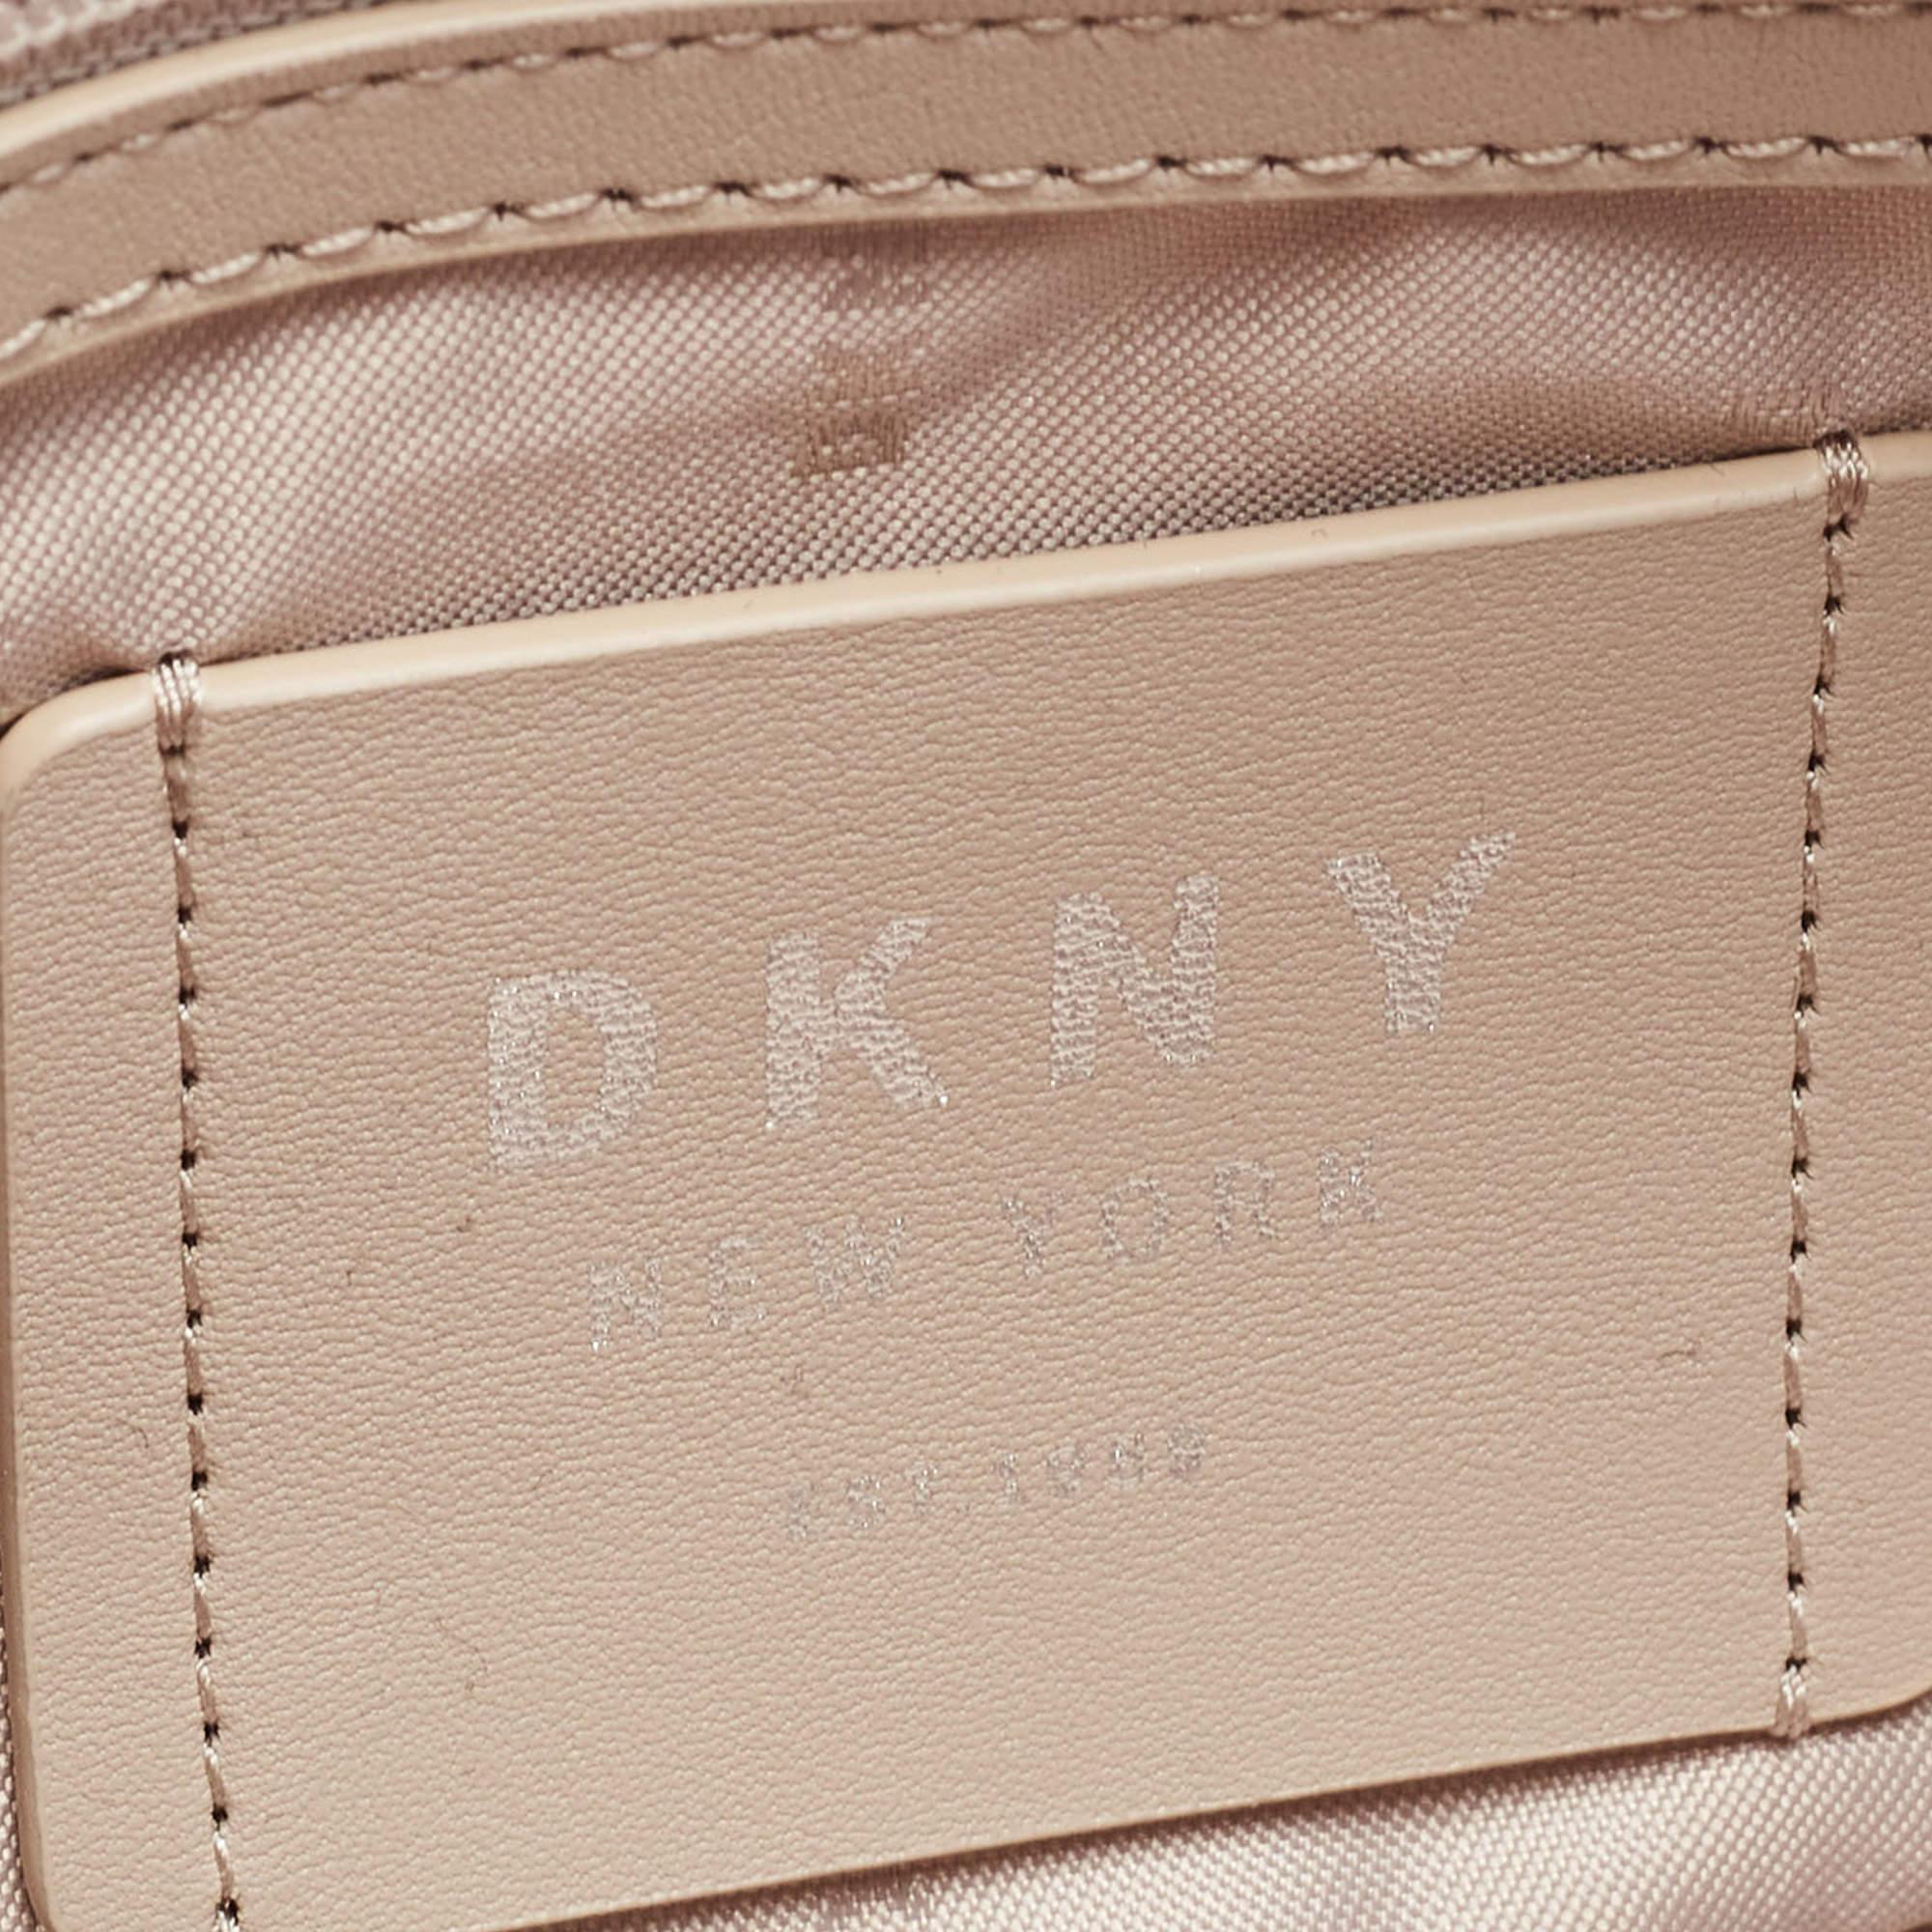 DKNY Beige Leather Bryant Dome Crossbody Bag 2